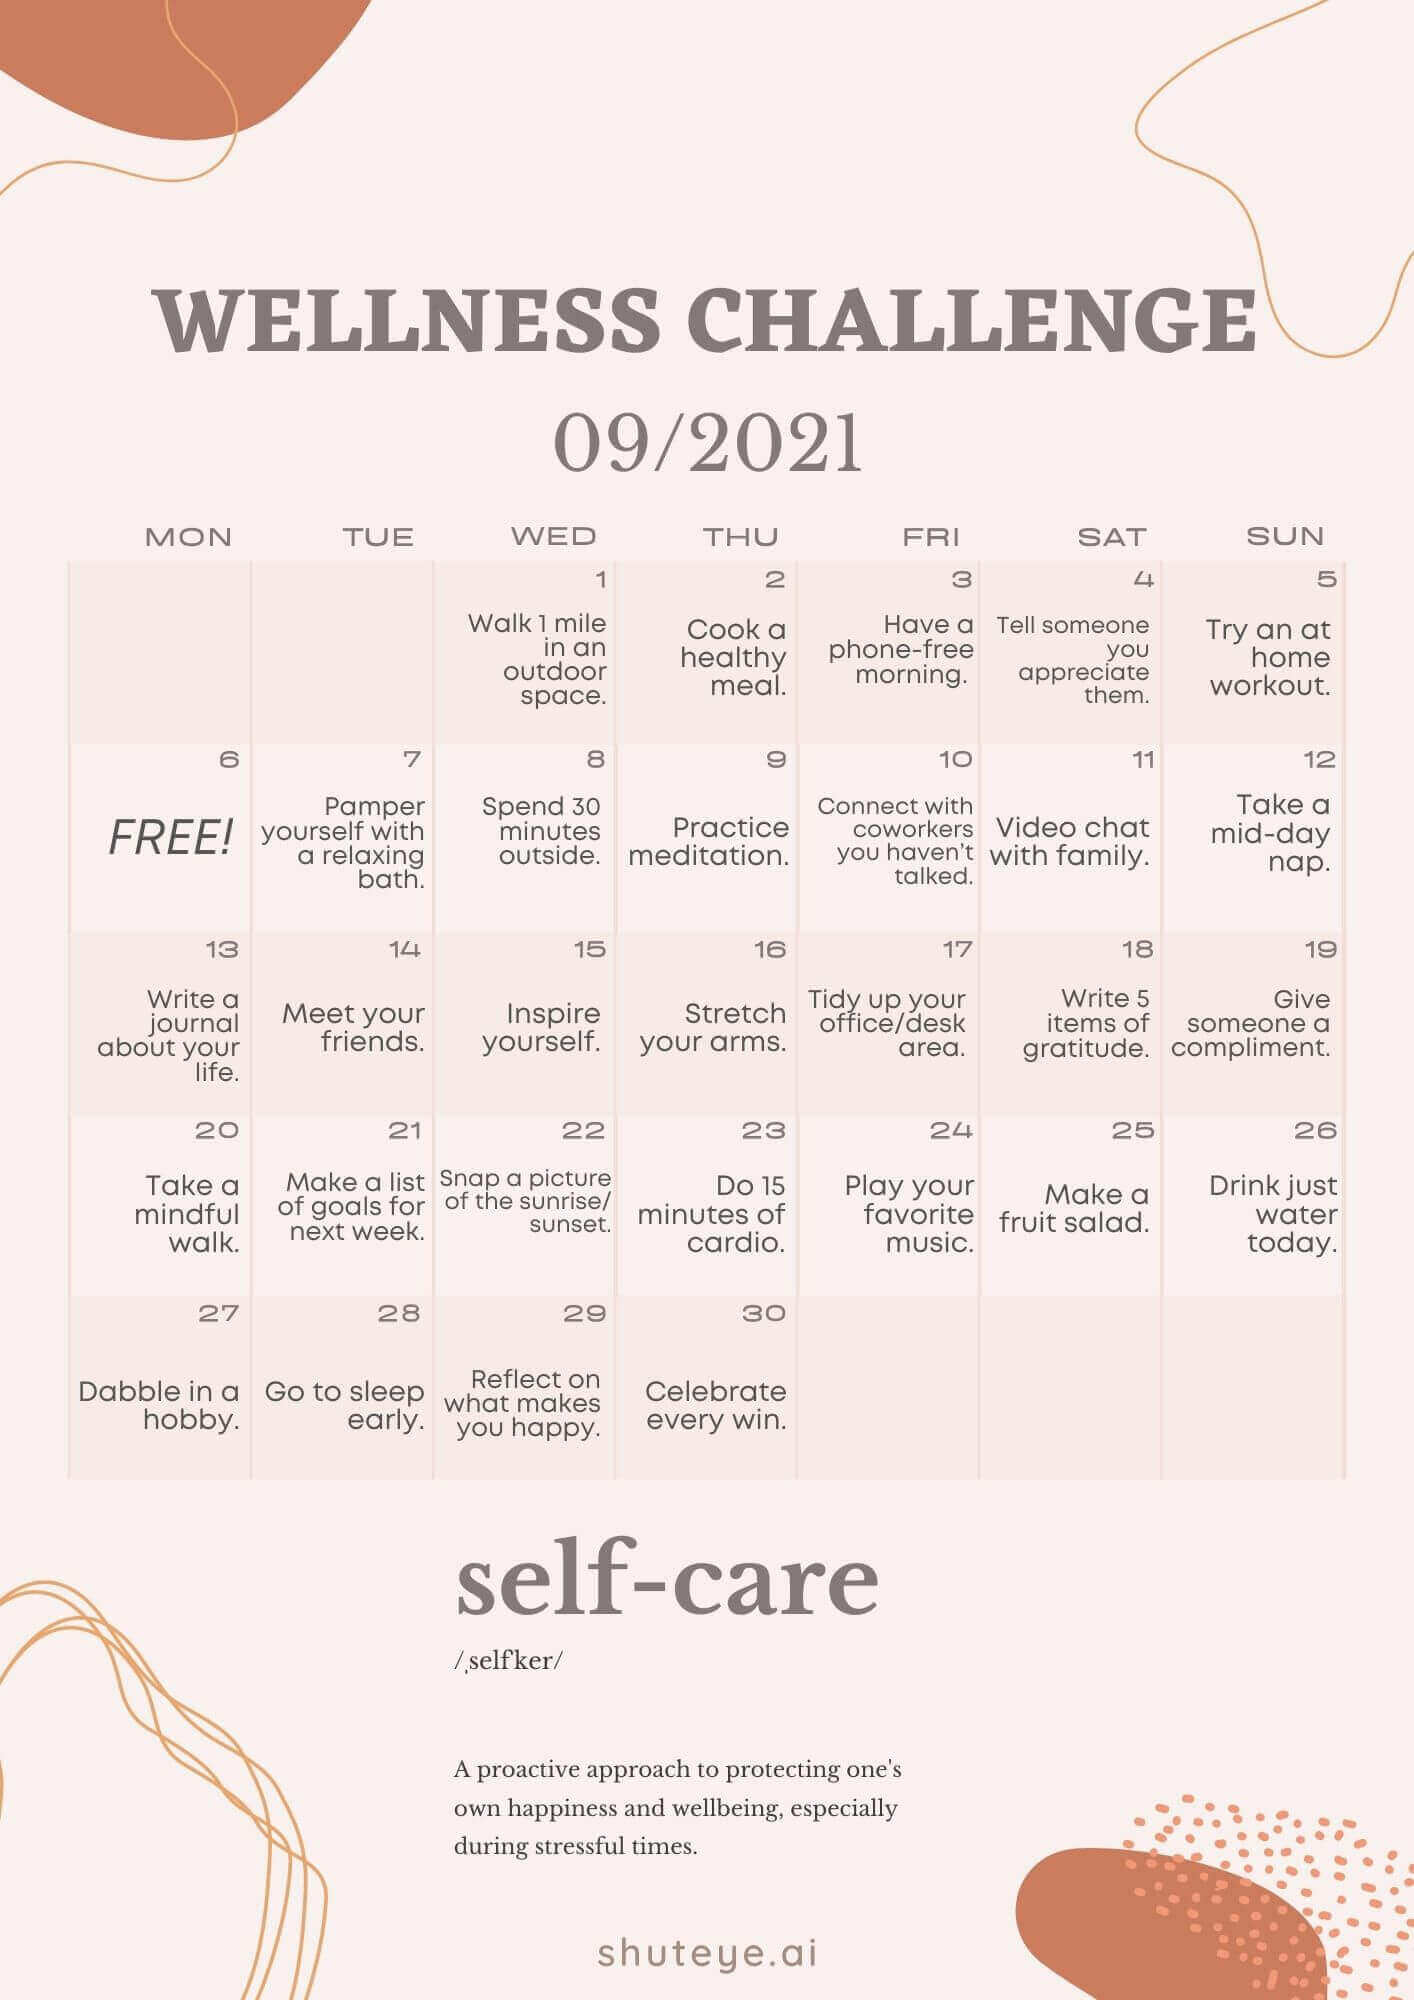 30 Day Wellness Challenge Calendar Ideas Free & Effective! ShutEye